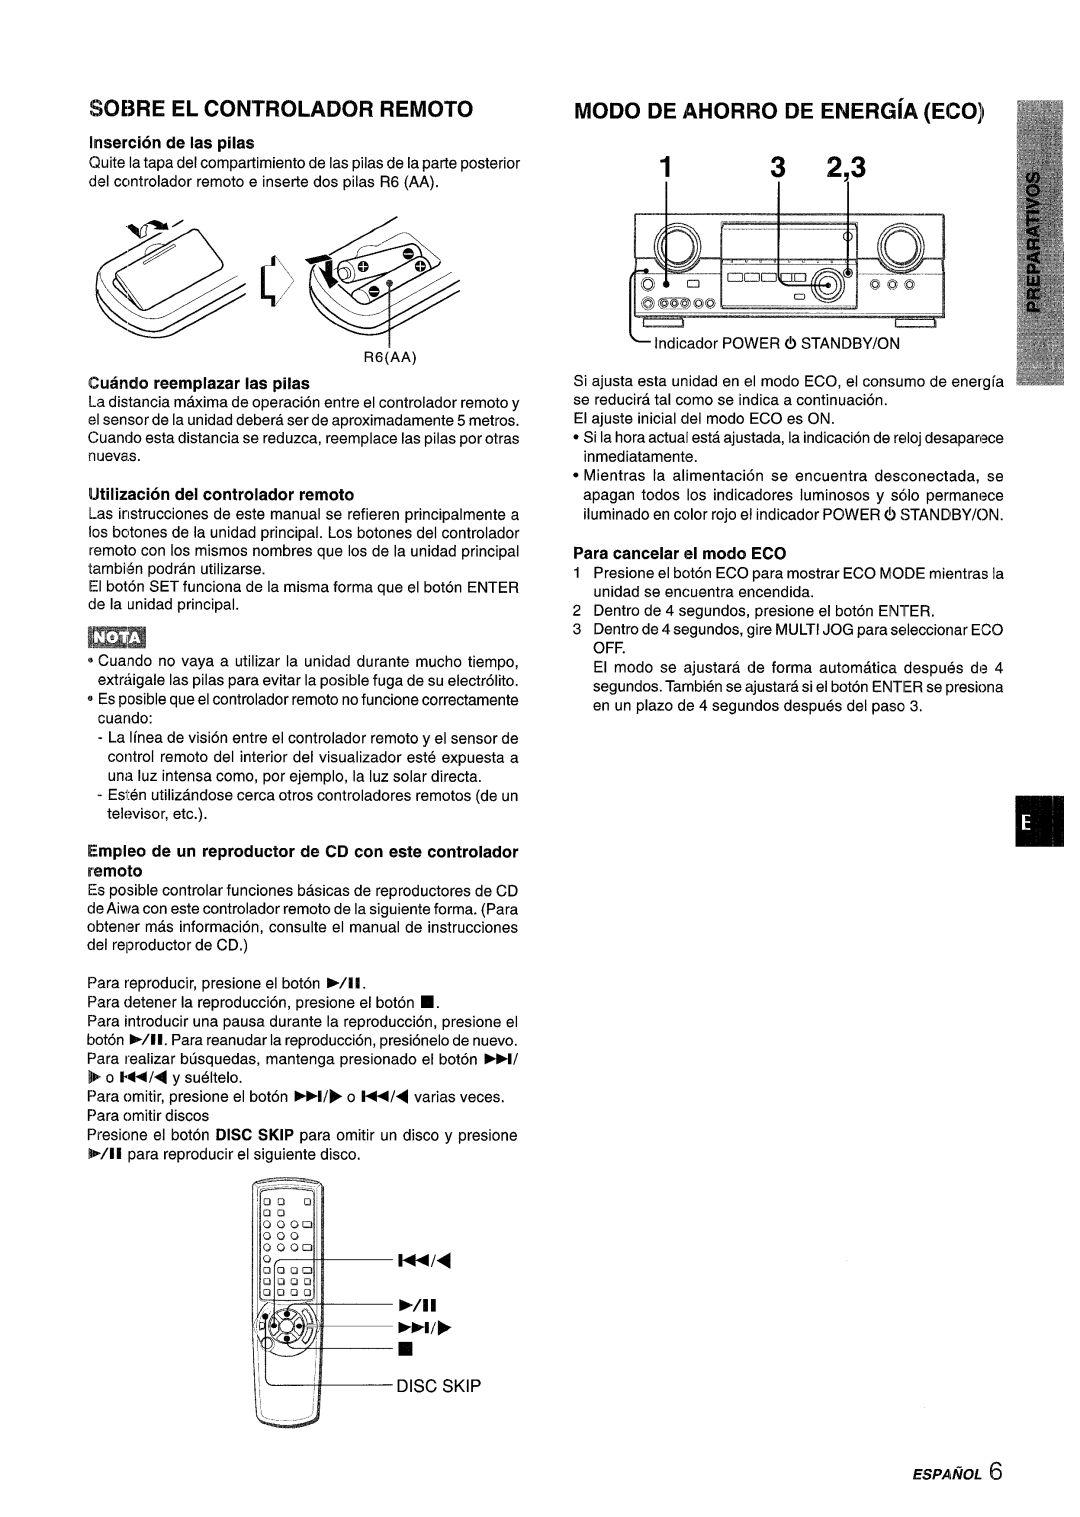 Aiwa AV-D55 manual +--&--Dl=Klp, 3 2,3, c-’--=, SOE3RE EL CONTROLADOR REMOTO, MODO DE AHORRO DE ENERGiA ECO, Espainol 